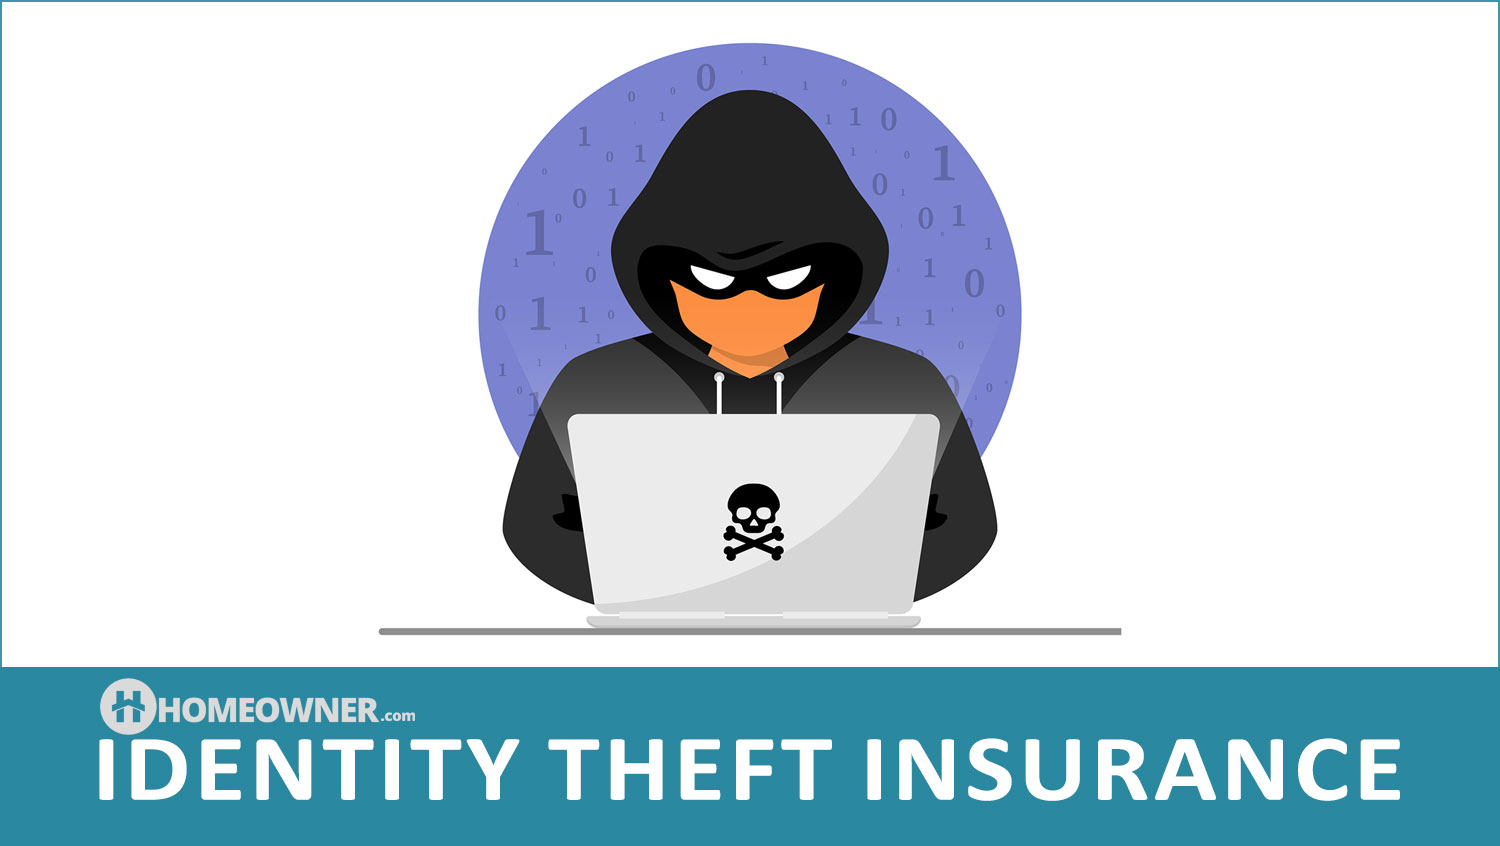 Best Identity Theft Insurance in 2022